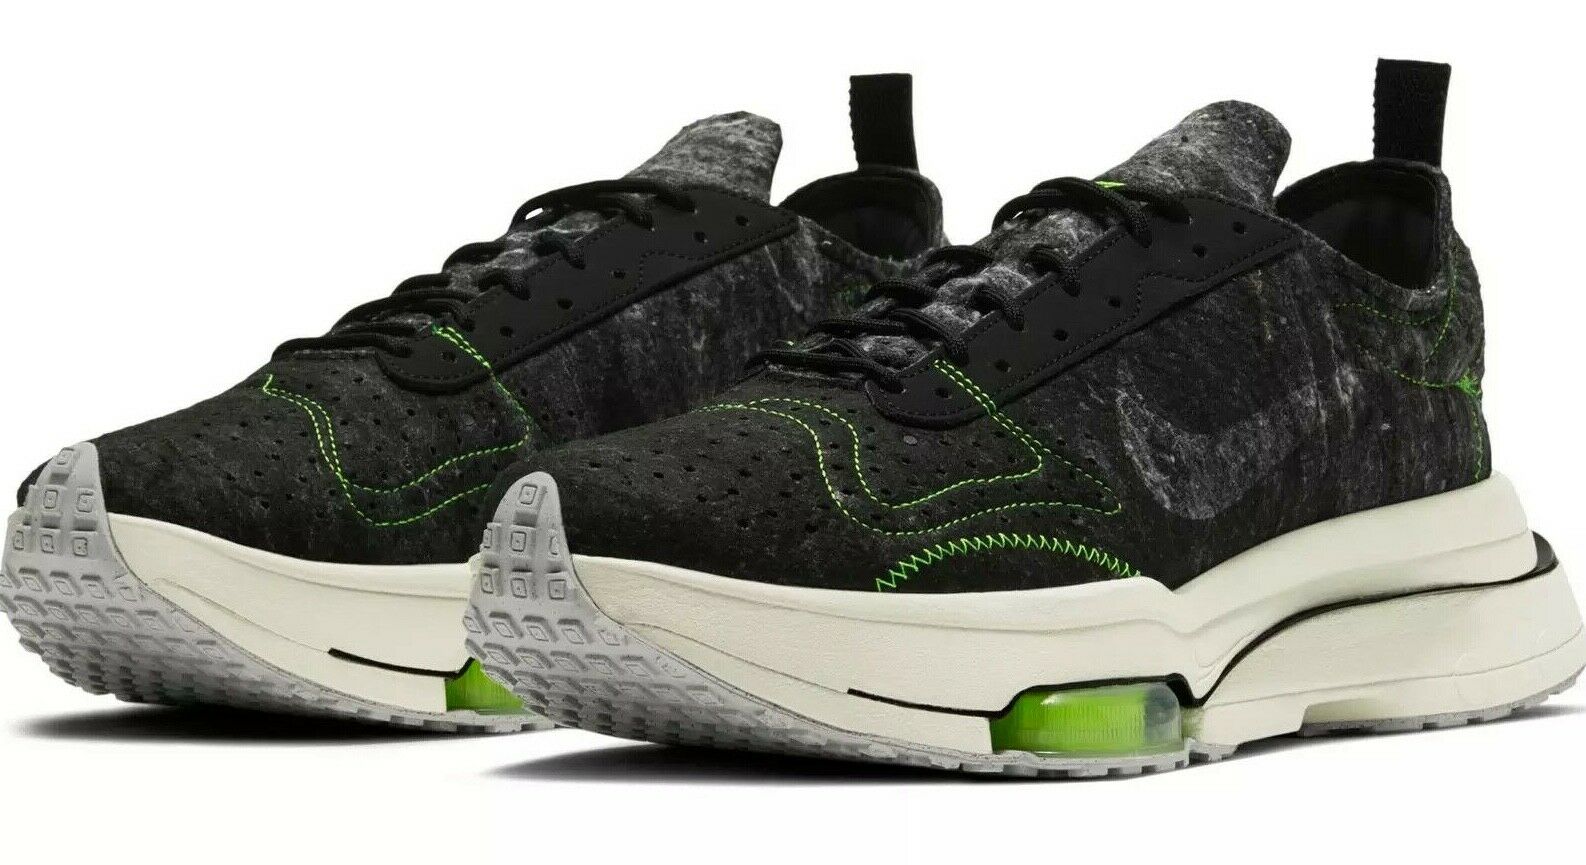 Nike (Air Zoom Type) Black Shoes Recycled (CW7157-001) Mens Size 12 NIB $160 ⭐️